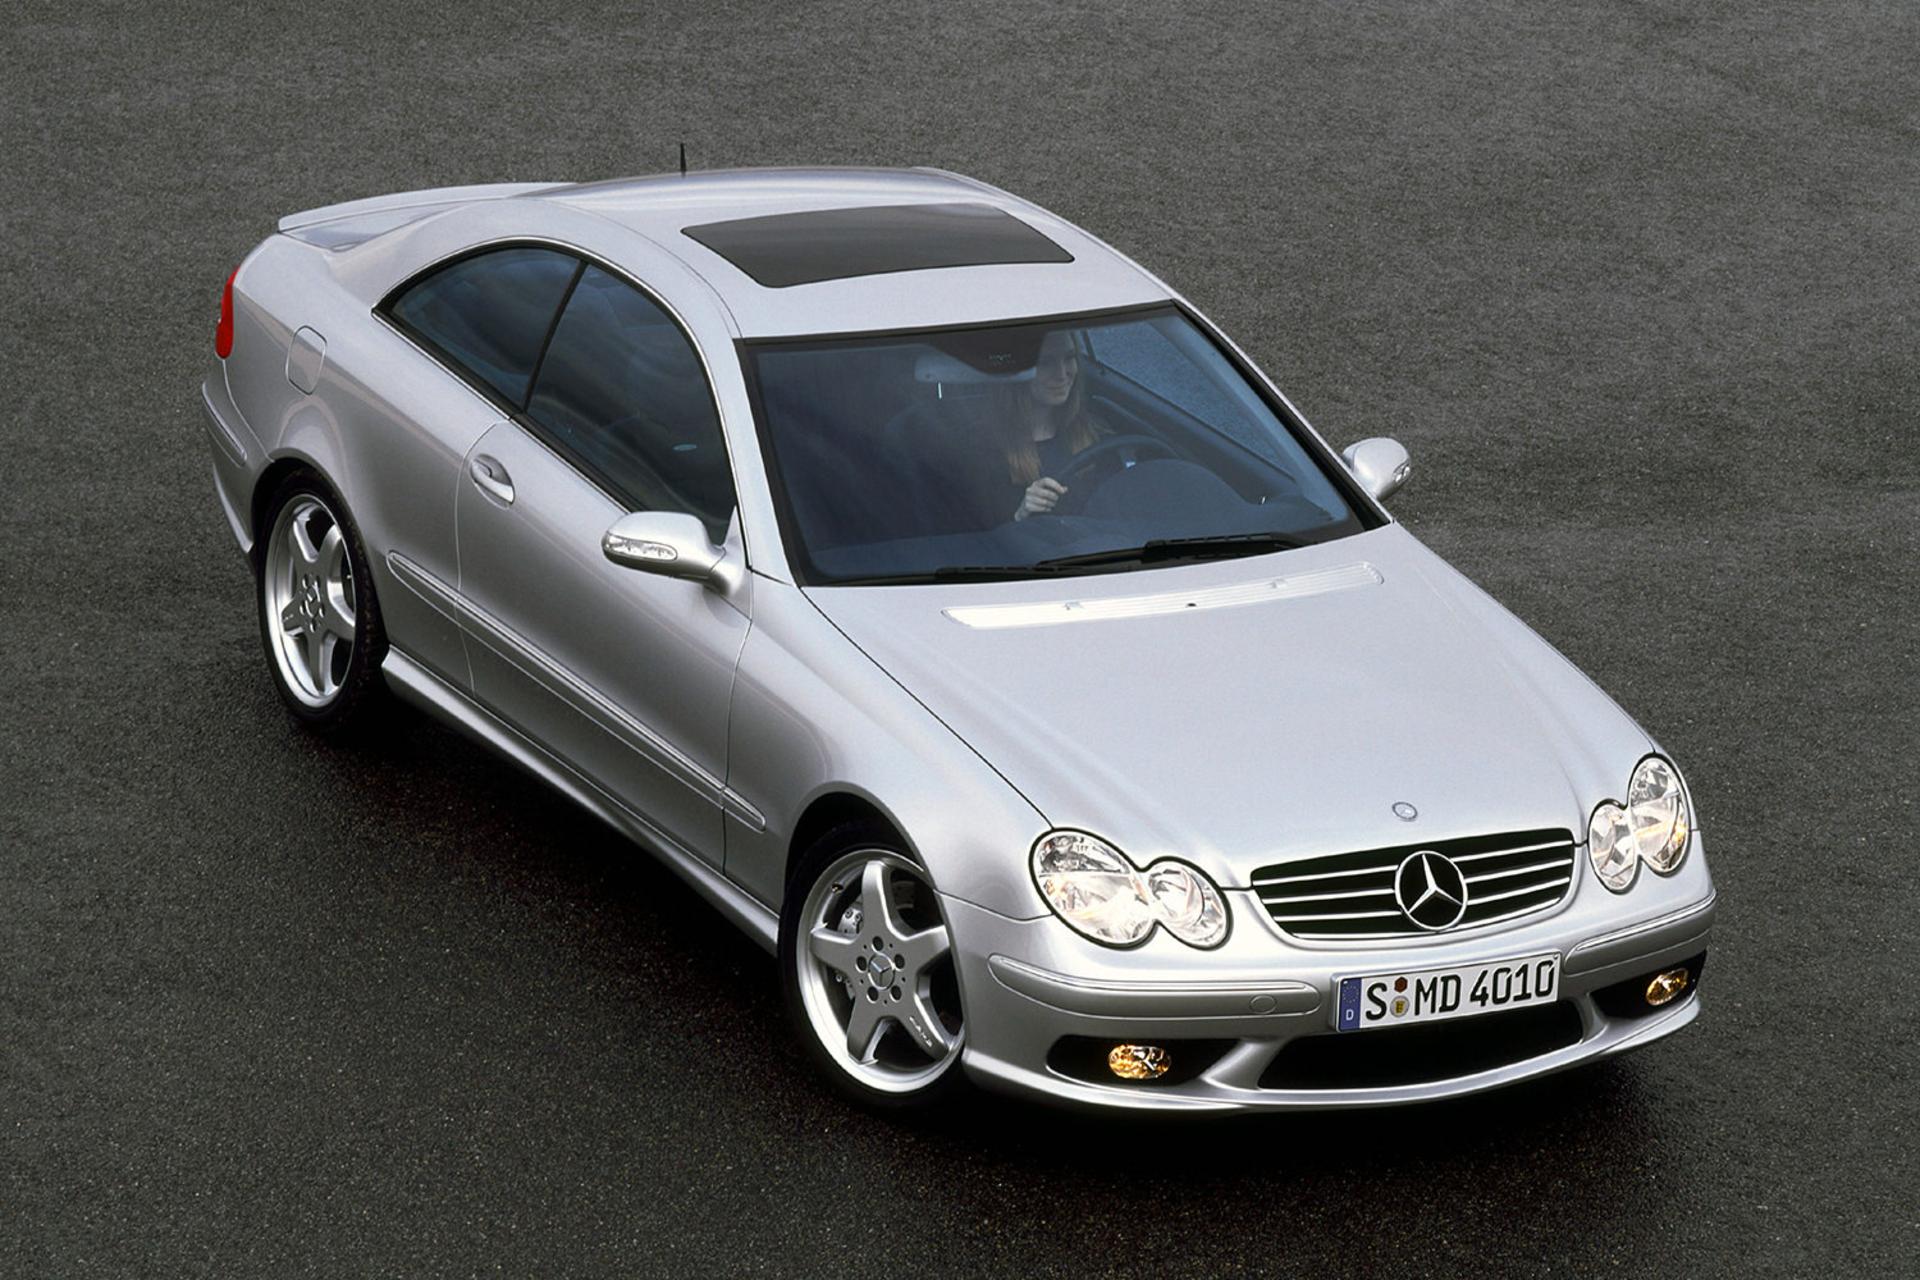 خودرو مرسدس بنز / Mercedes Benz CLK 350 2003 نمای جلو ۳